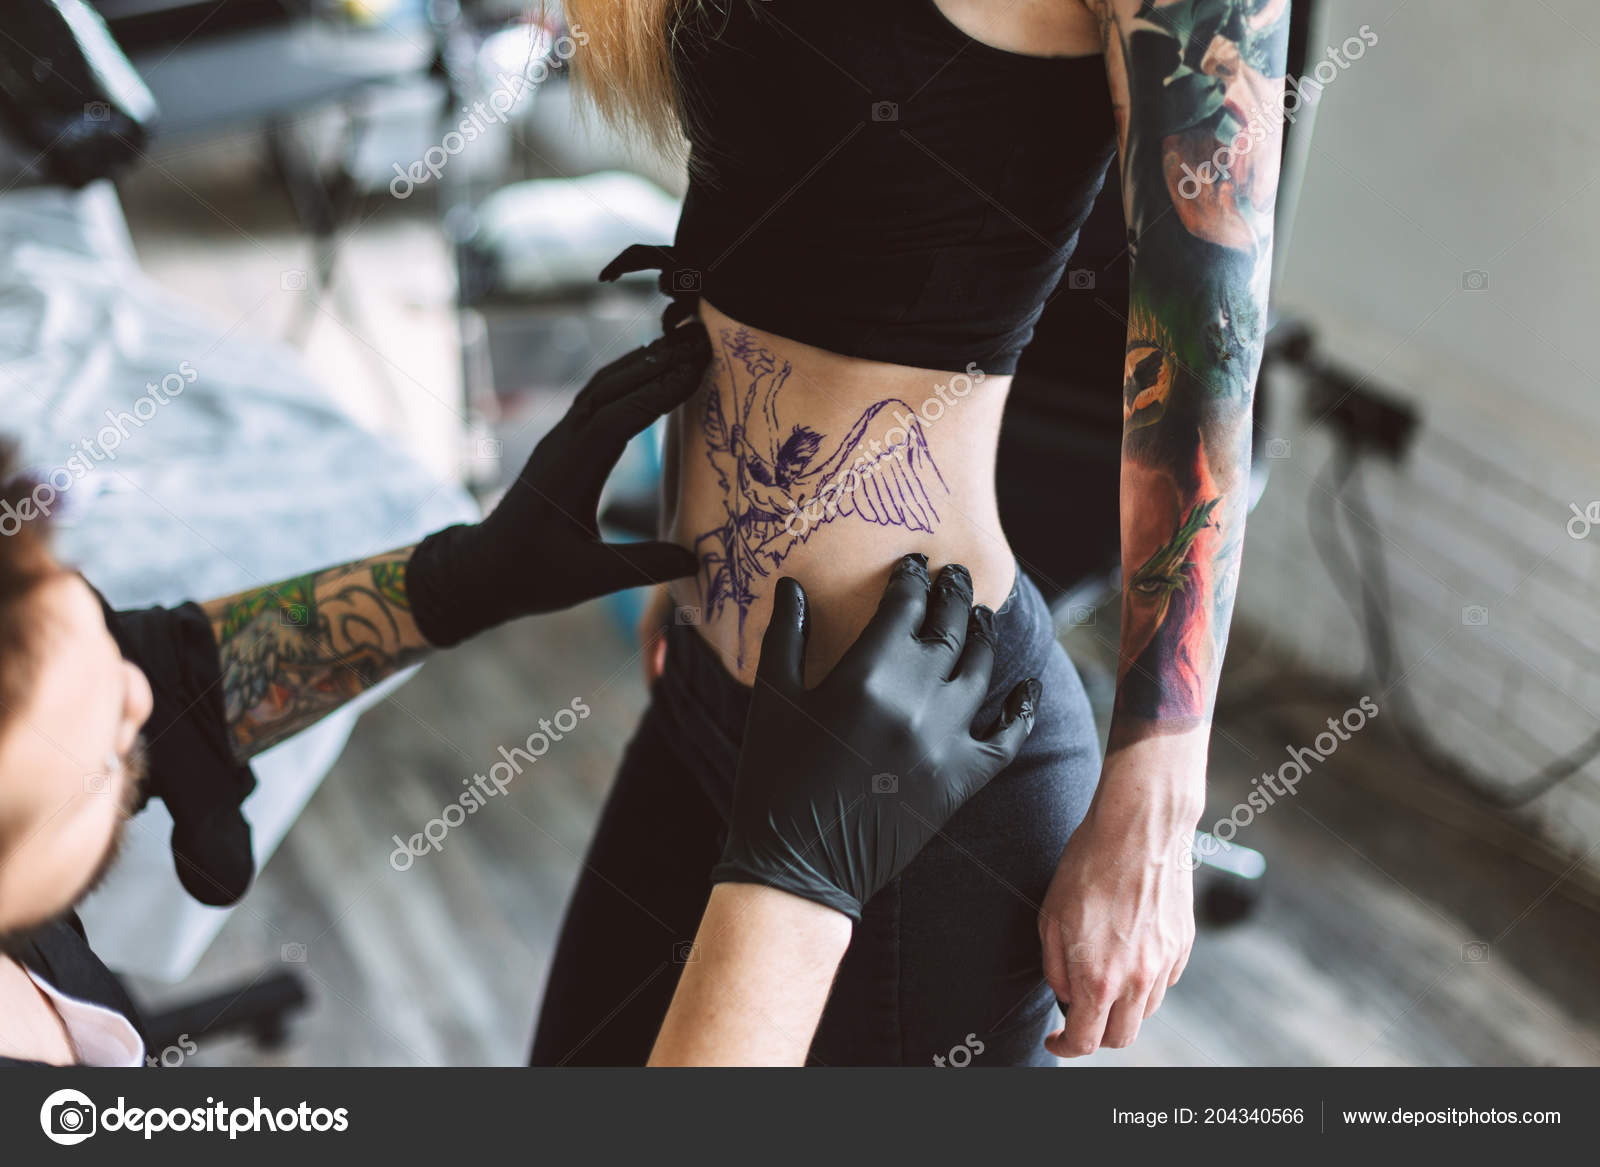 Tattoo woman business Stock Photos, Royalty Free Tattoo woman business  Images | Depositphotos